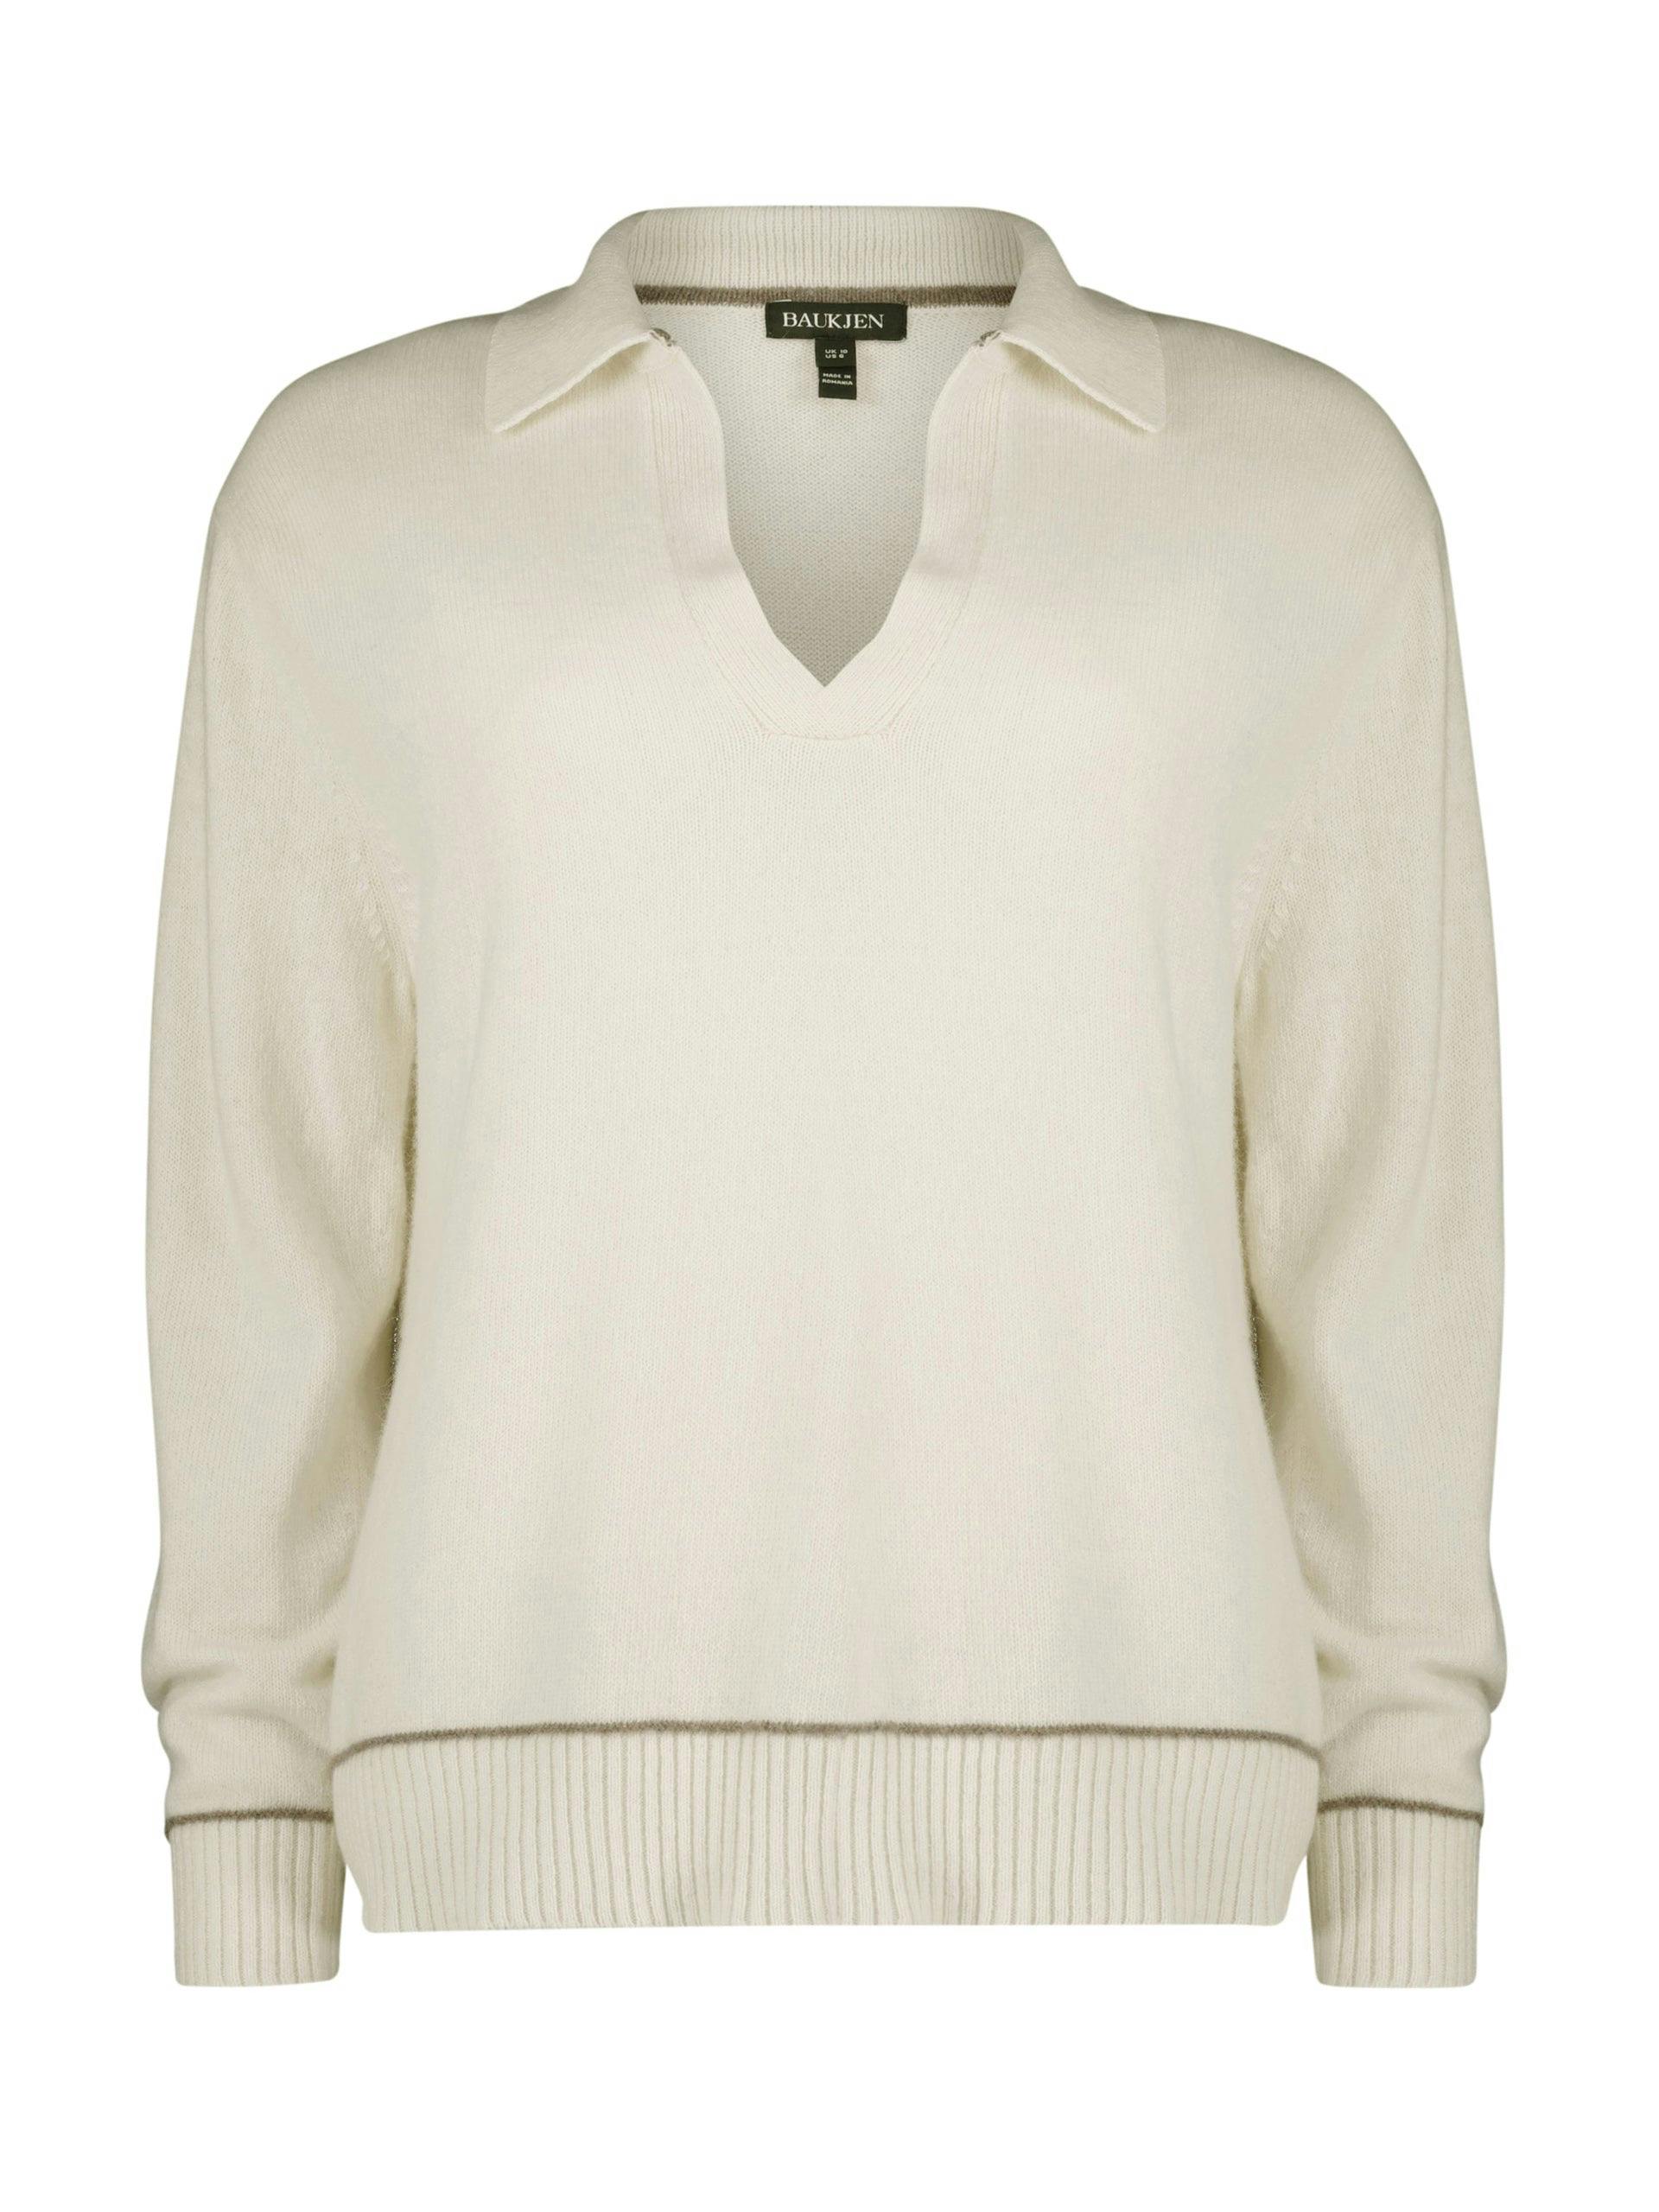 Radana white eco-cashmere v-neck knit